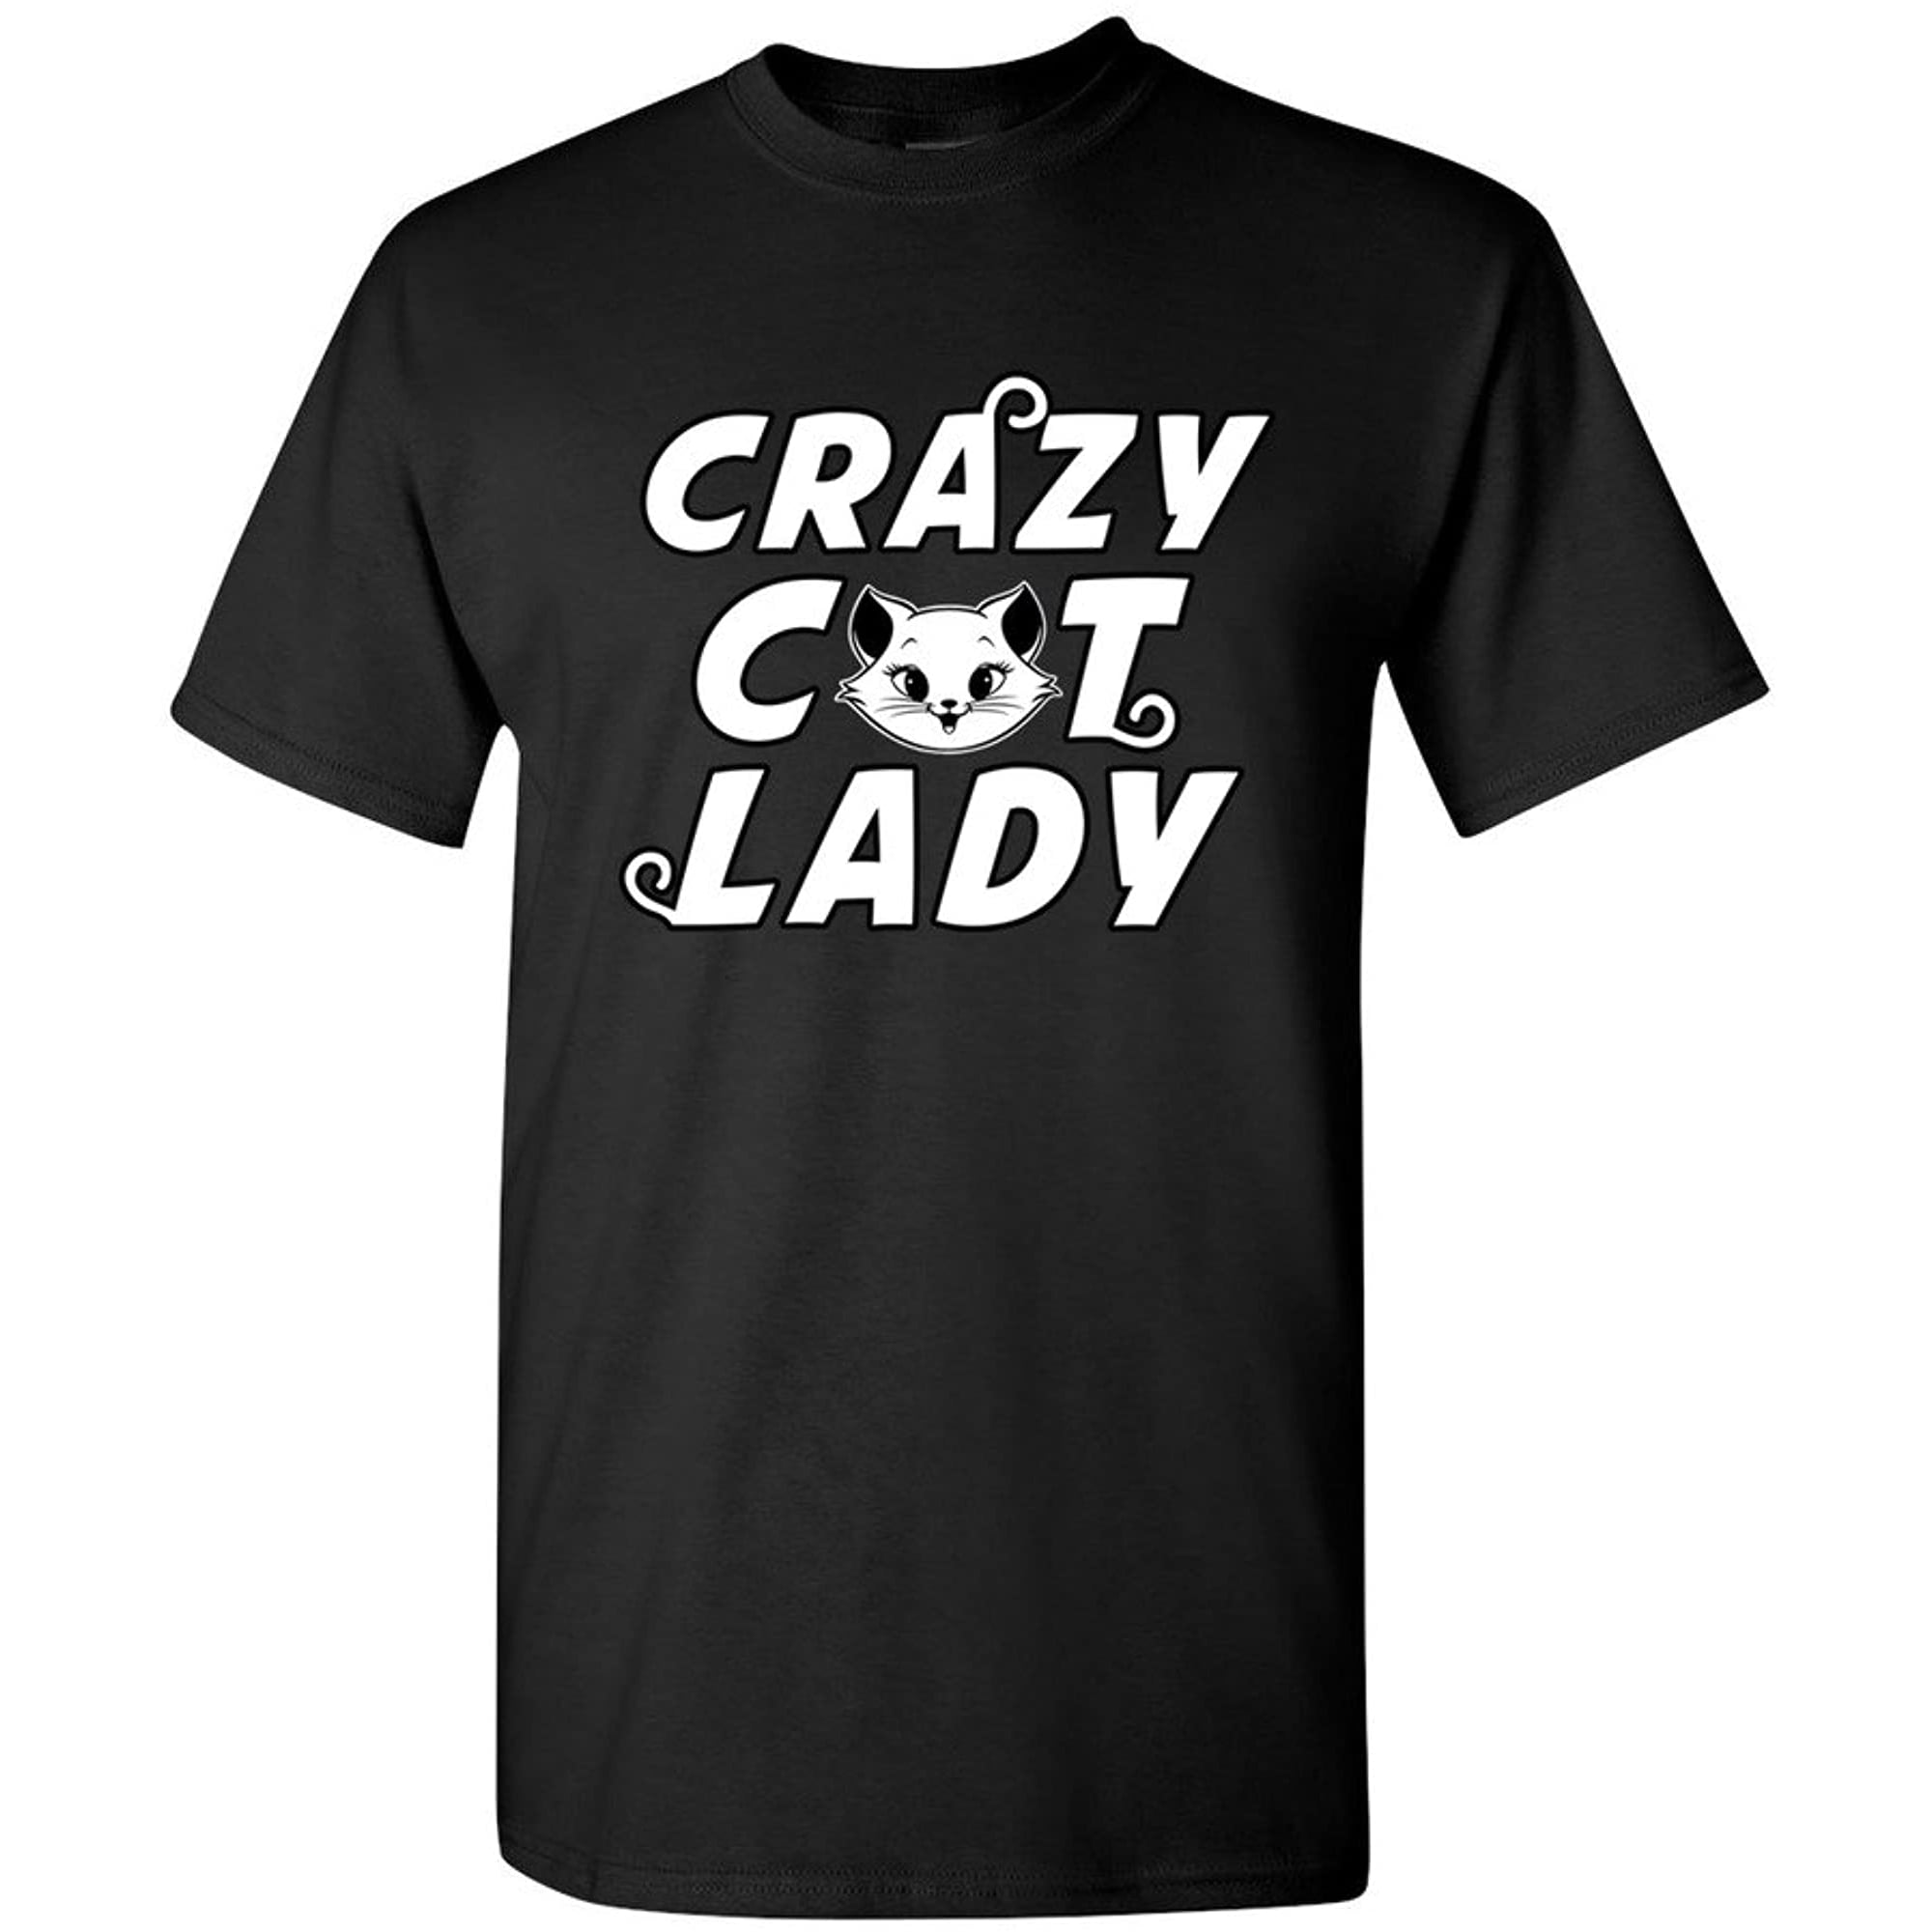 Crazy Cat Lady Cartoon Parody Funny DT Adult T-Shirt Tee | Walmart Canada